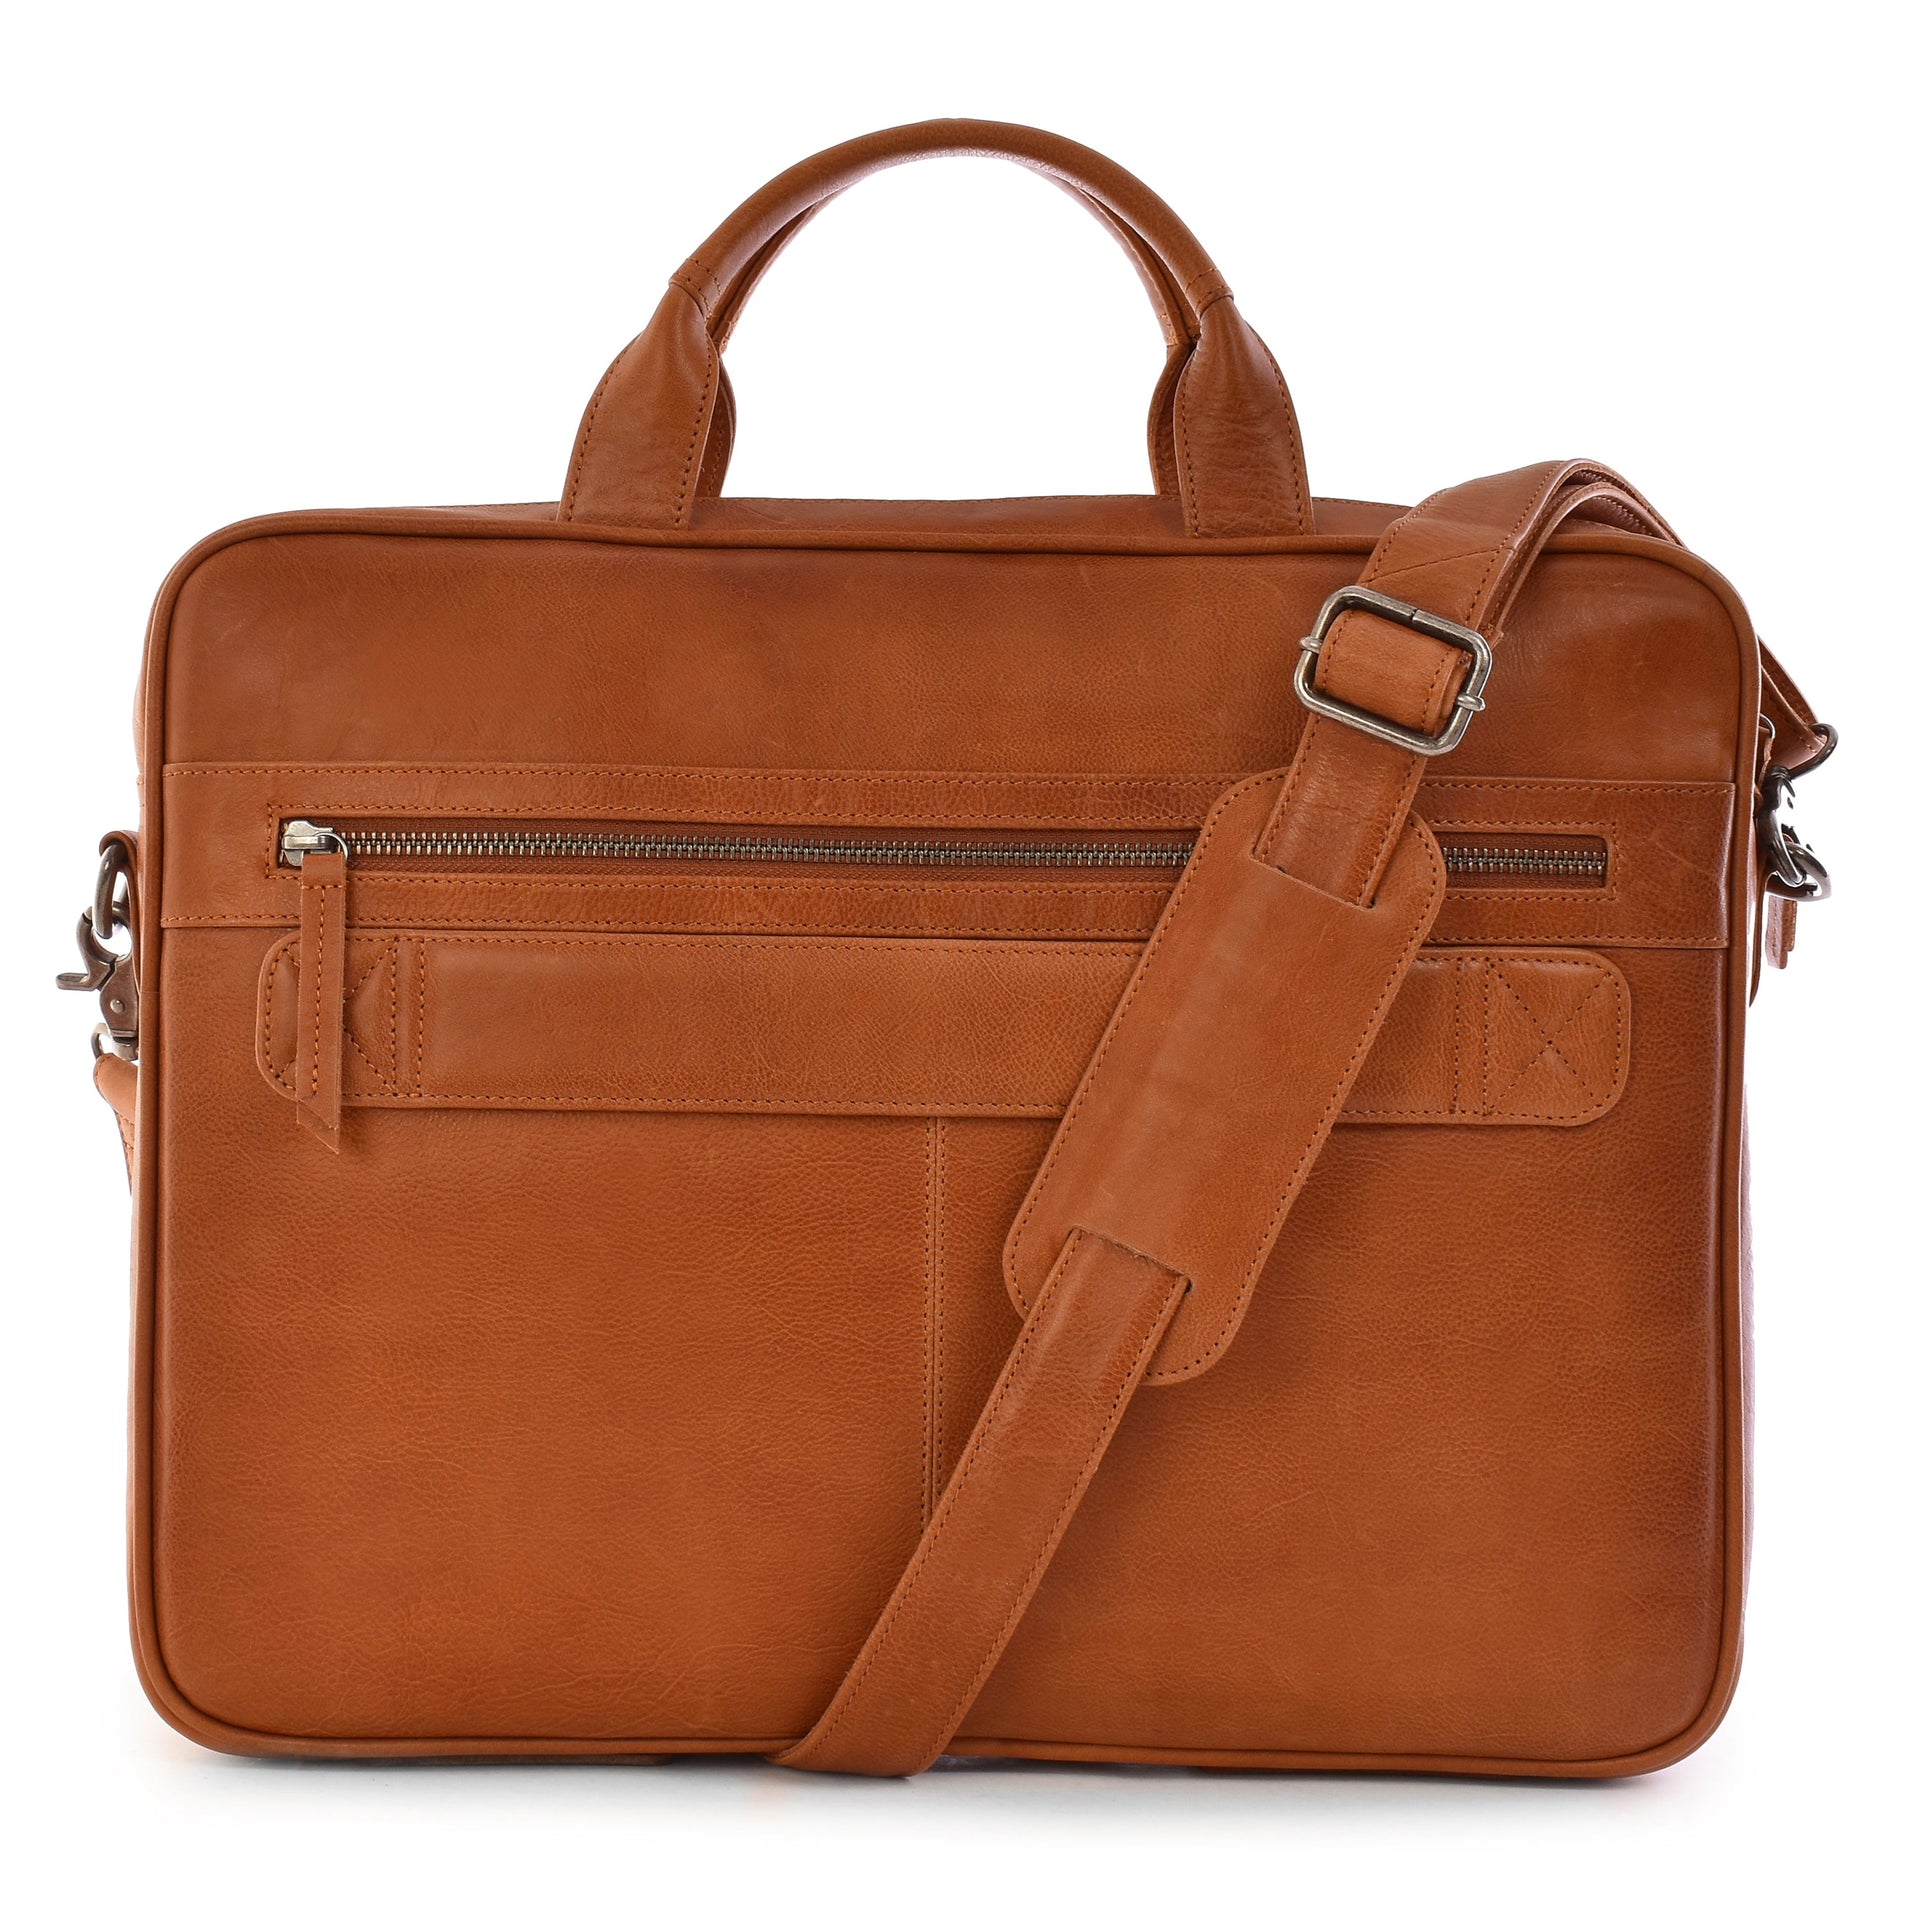 Hartfield Business Bag - Laptop Bags